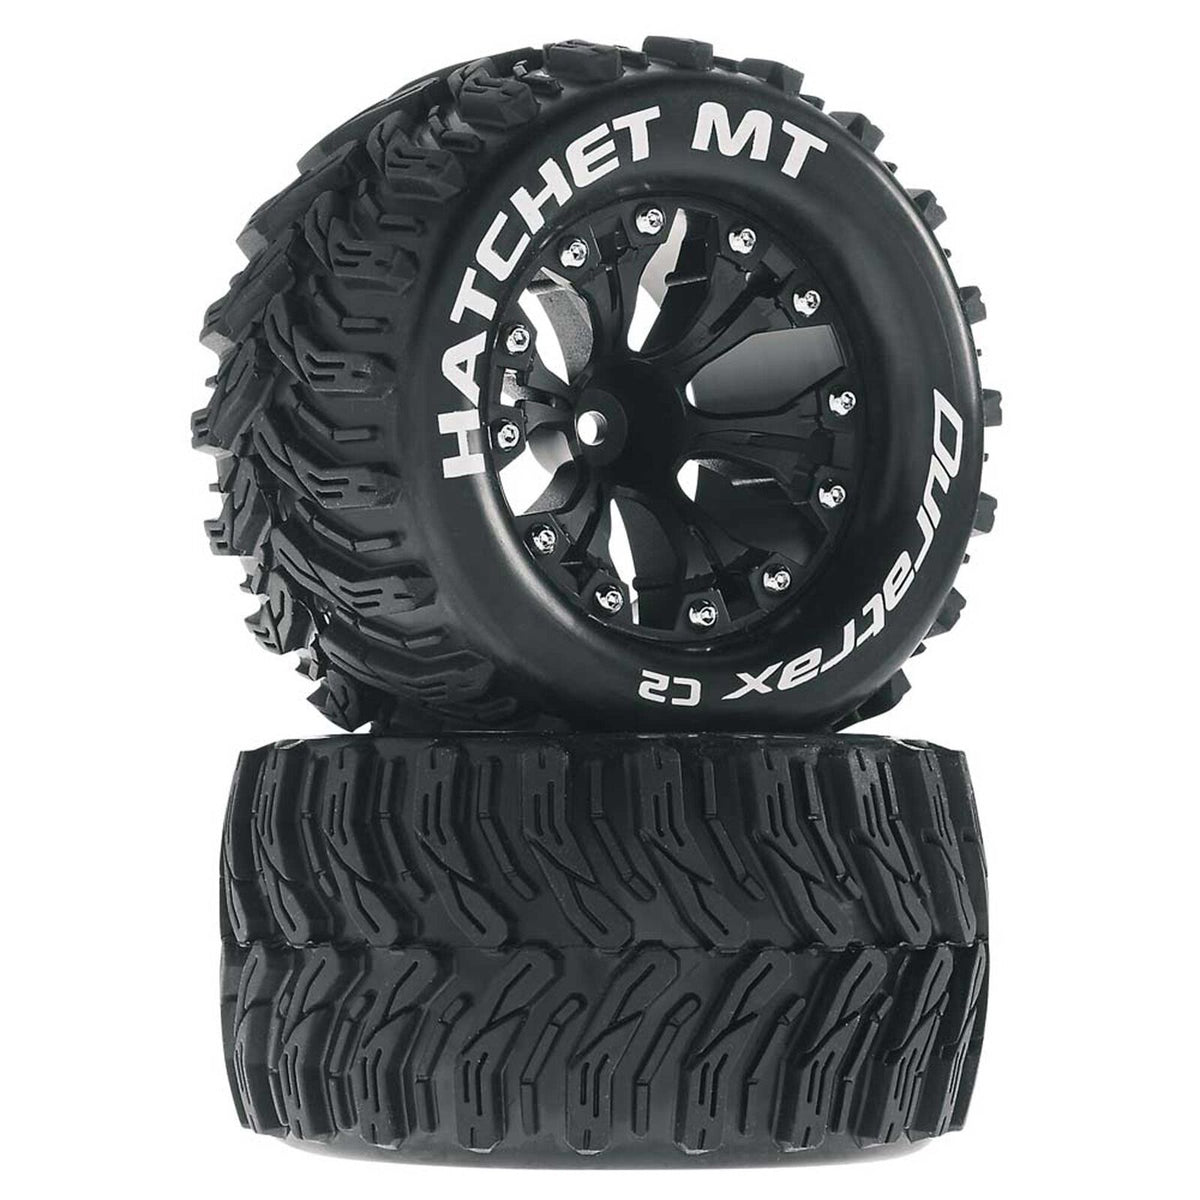 Hatchet MT 2.8" Mounted Offset Tires, Black (2) - DTXC3528